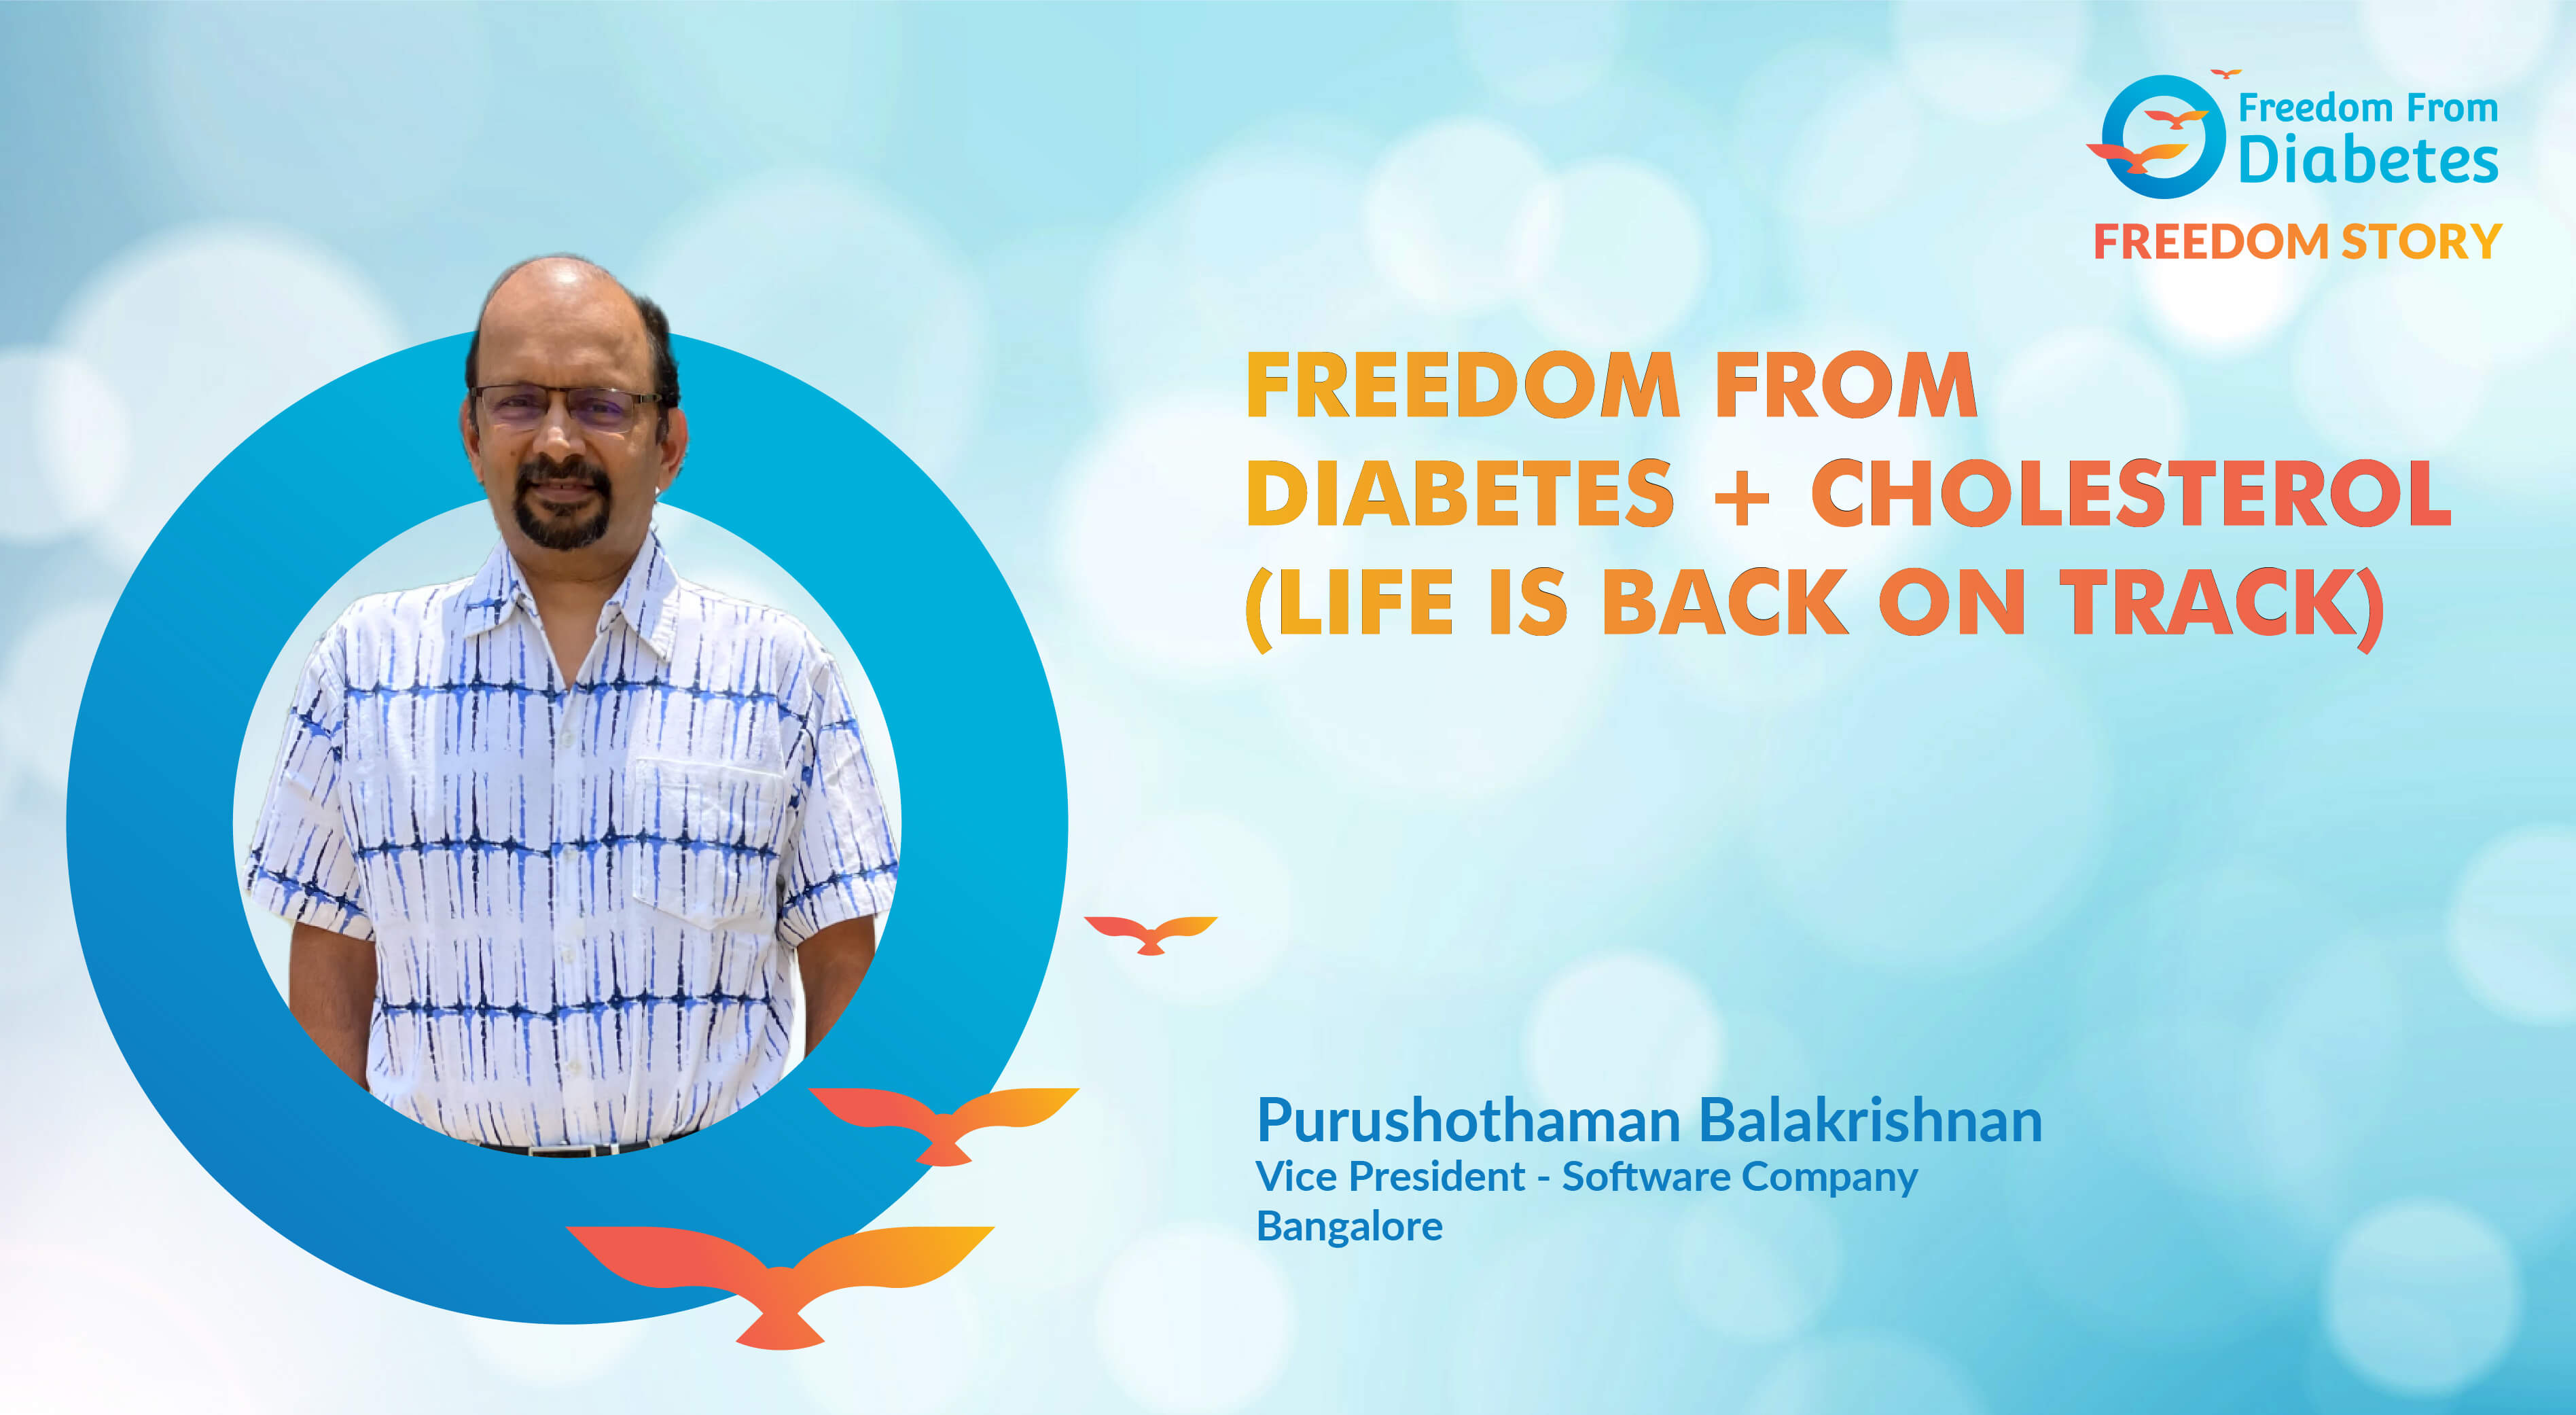 Purushothaman Balakrishnan: Freedom from Diabetes and Cholesterol